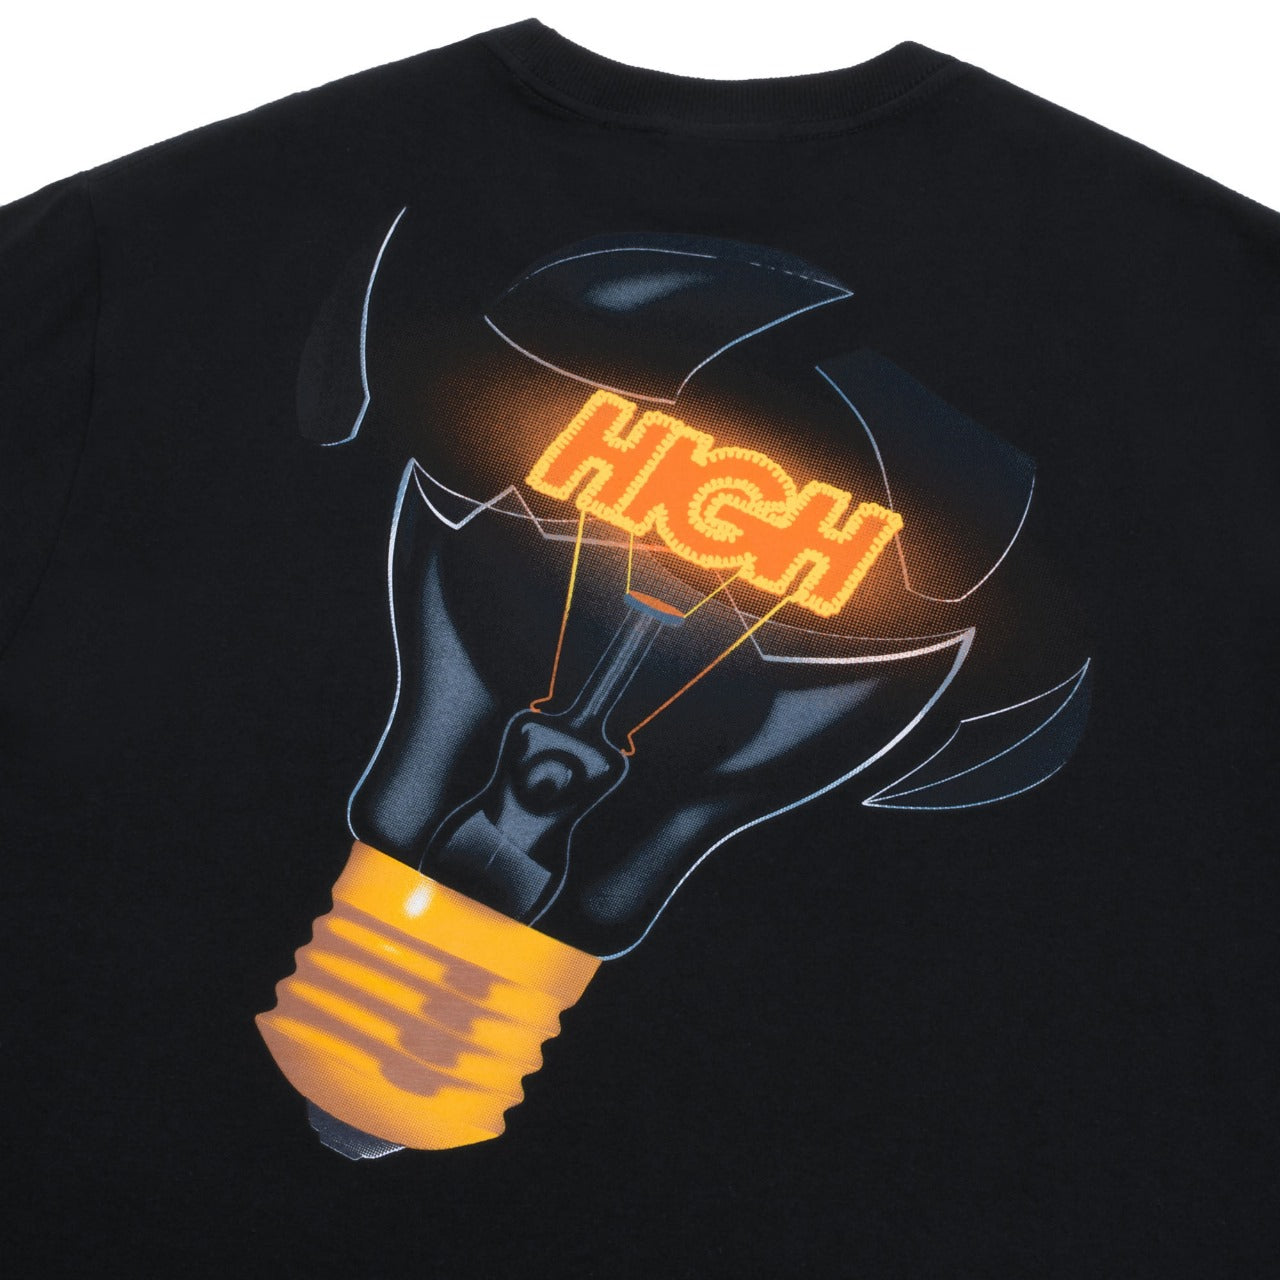 Camiseta High Bulb Black (8102897615064)